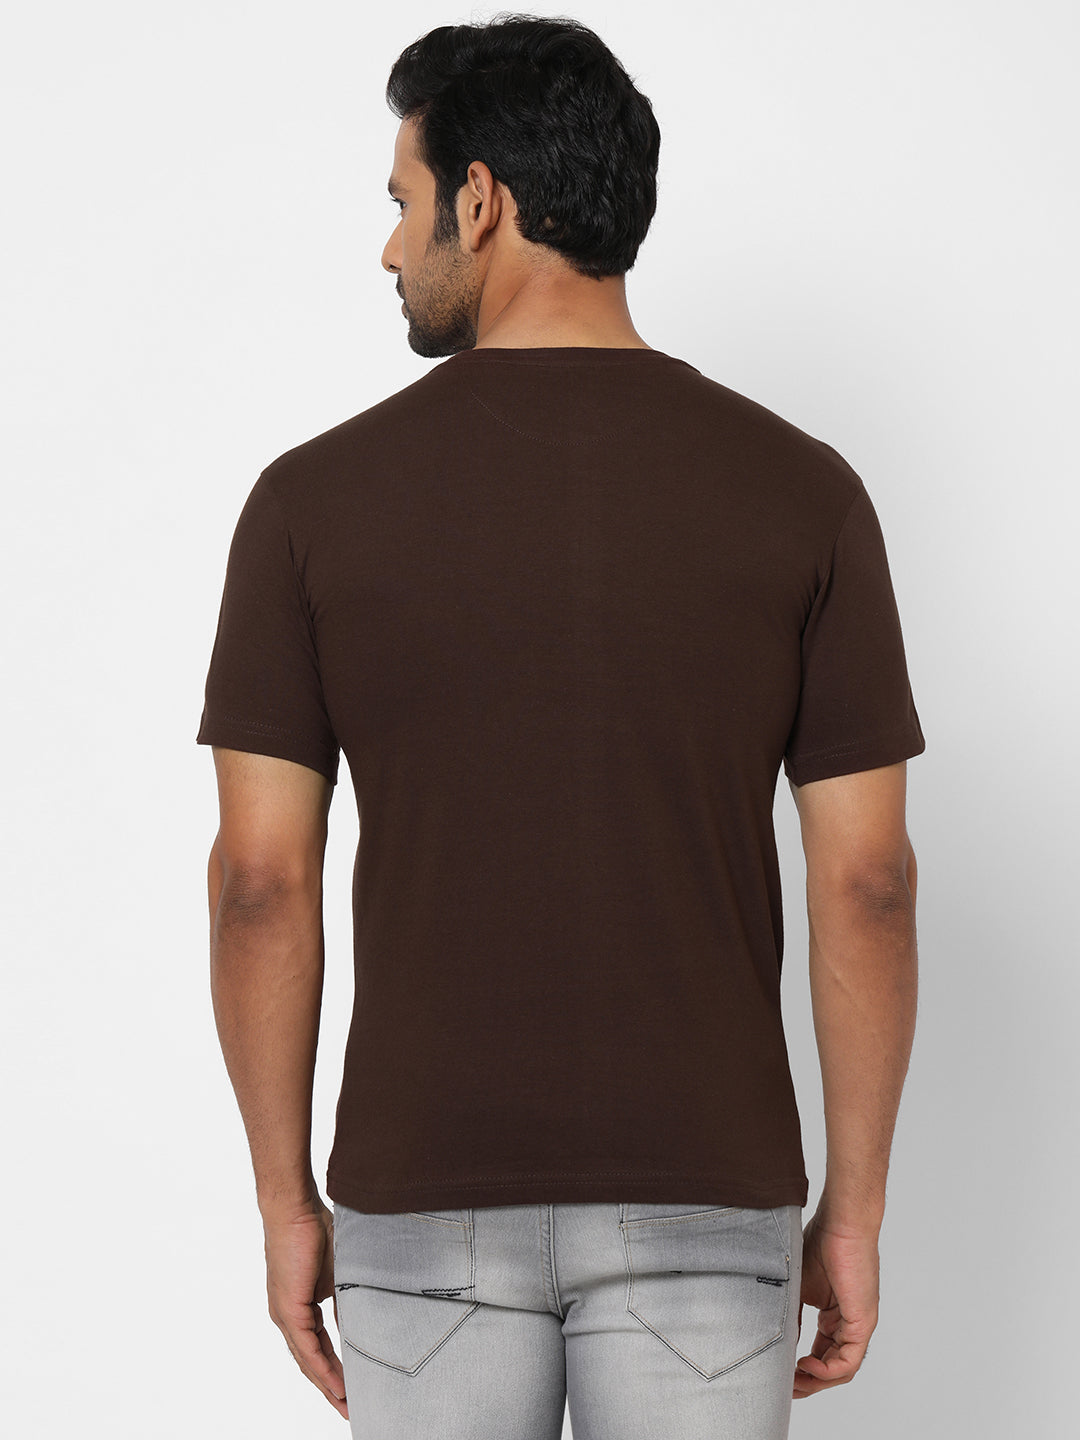 Basic Chocolate Brown T-Shirt